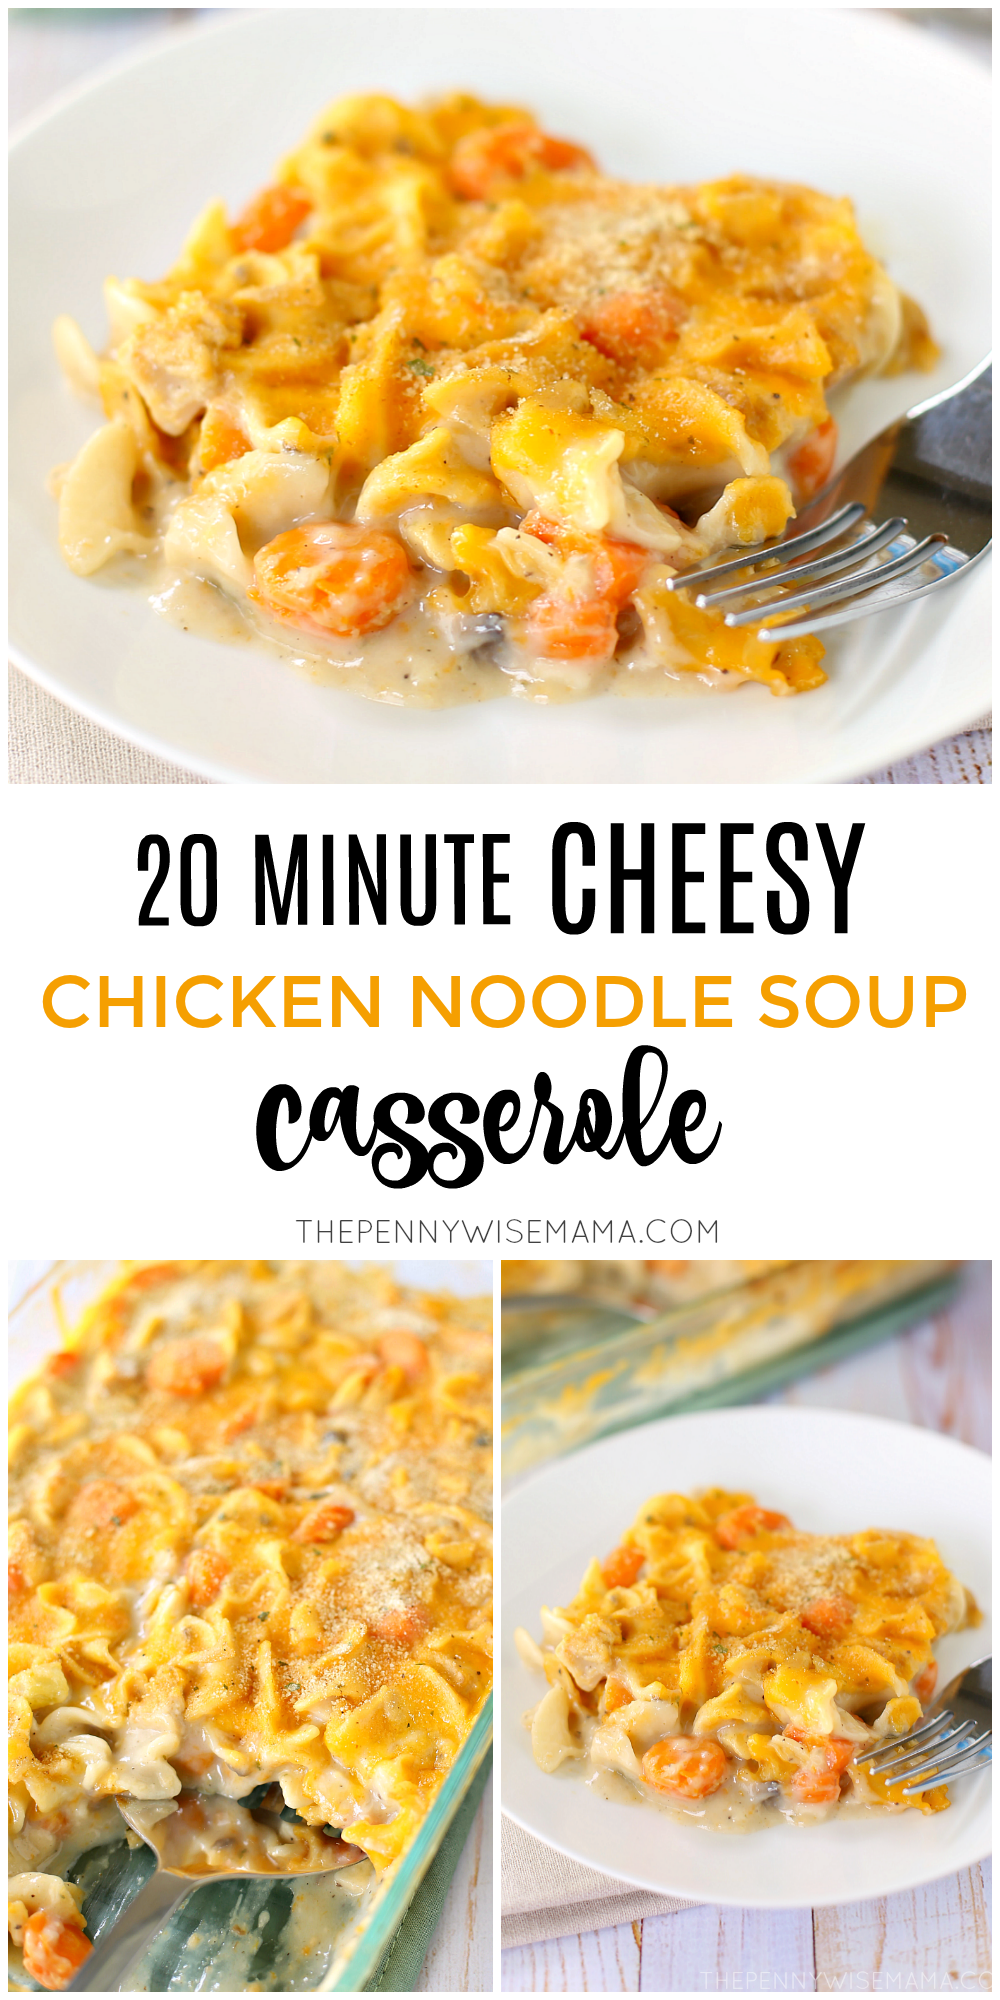 20 Minute Cheesy Chicken Noodle Soup Casserole - delicious, quick and easy recipe!